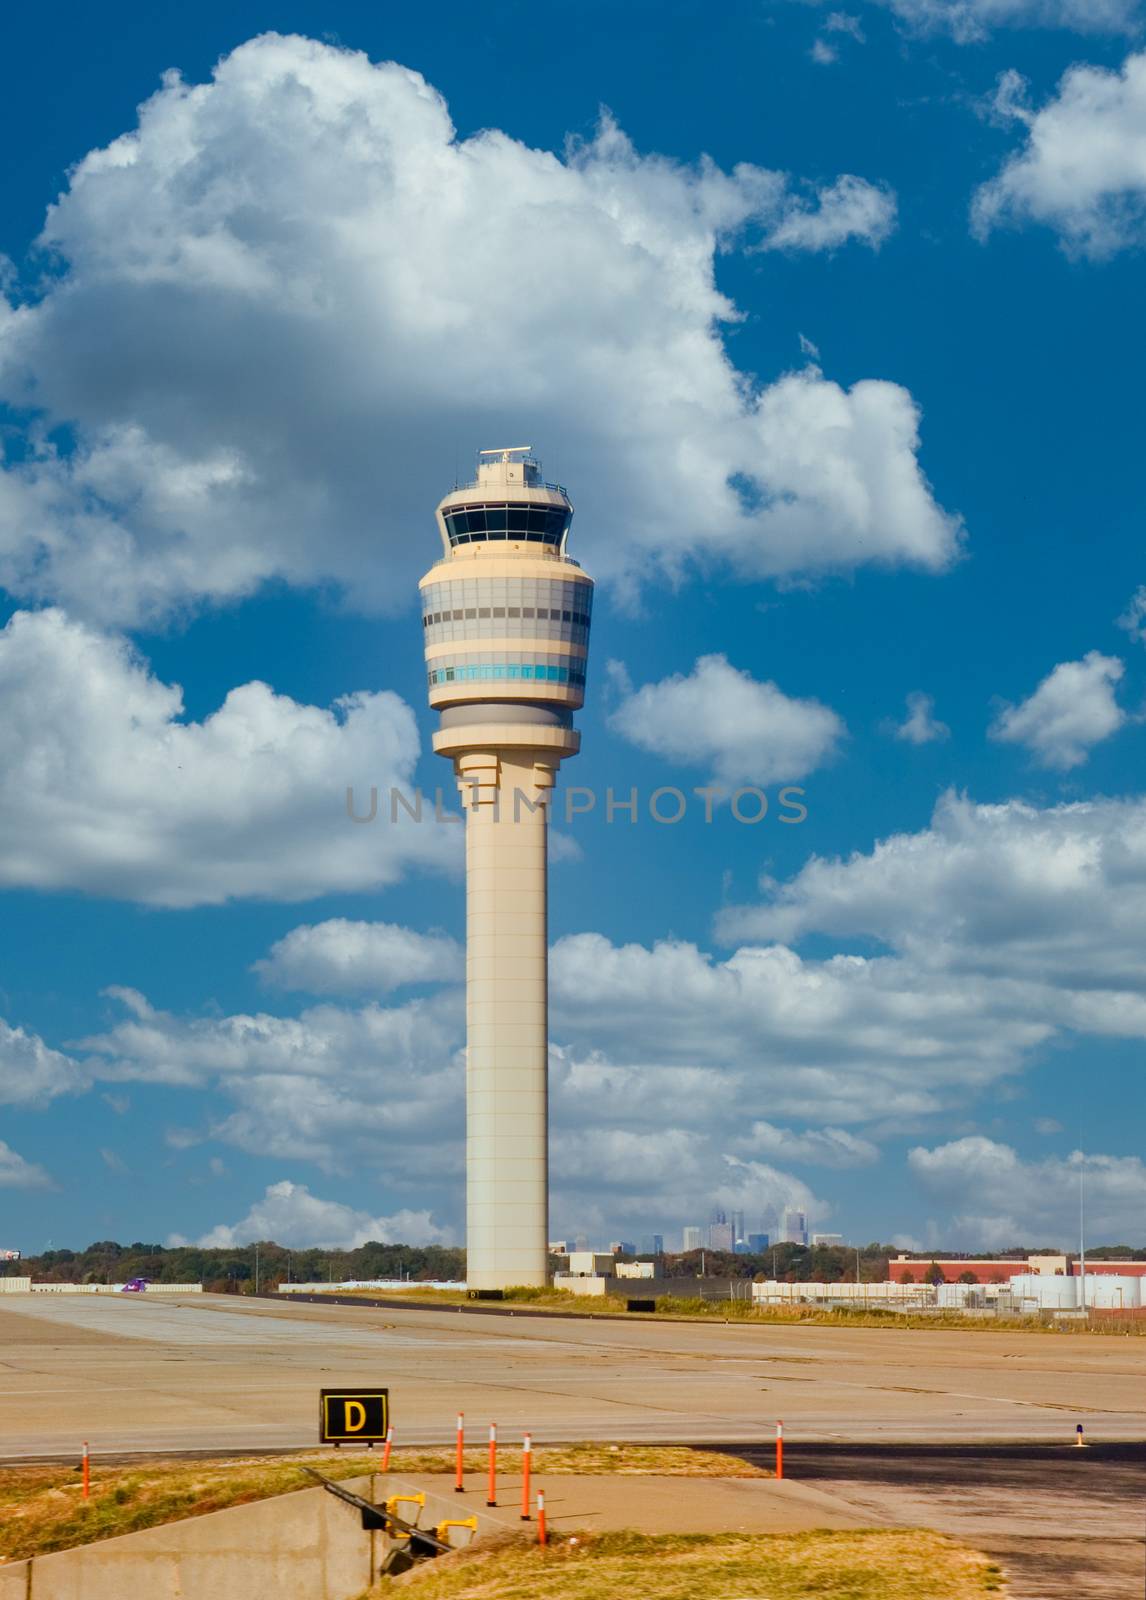 Control tower at a major metropolitan airport